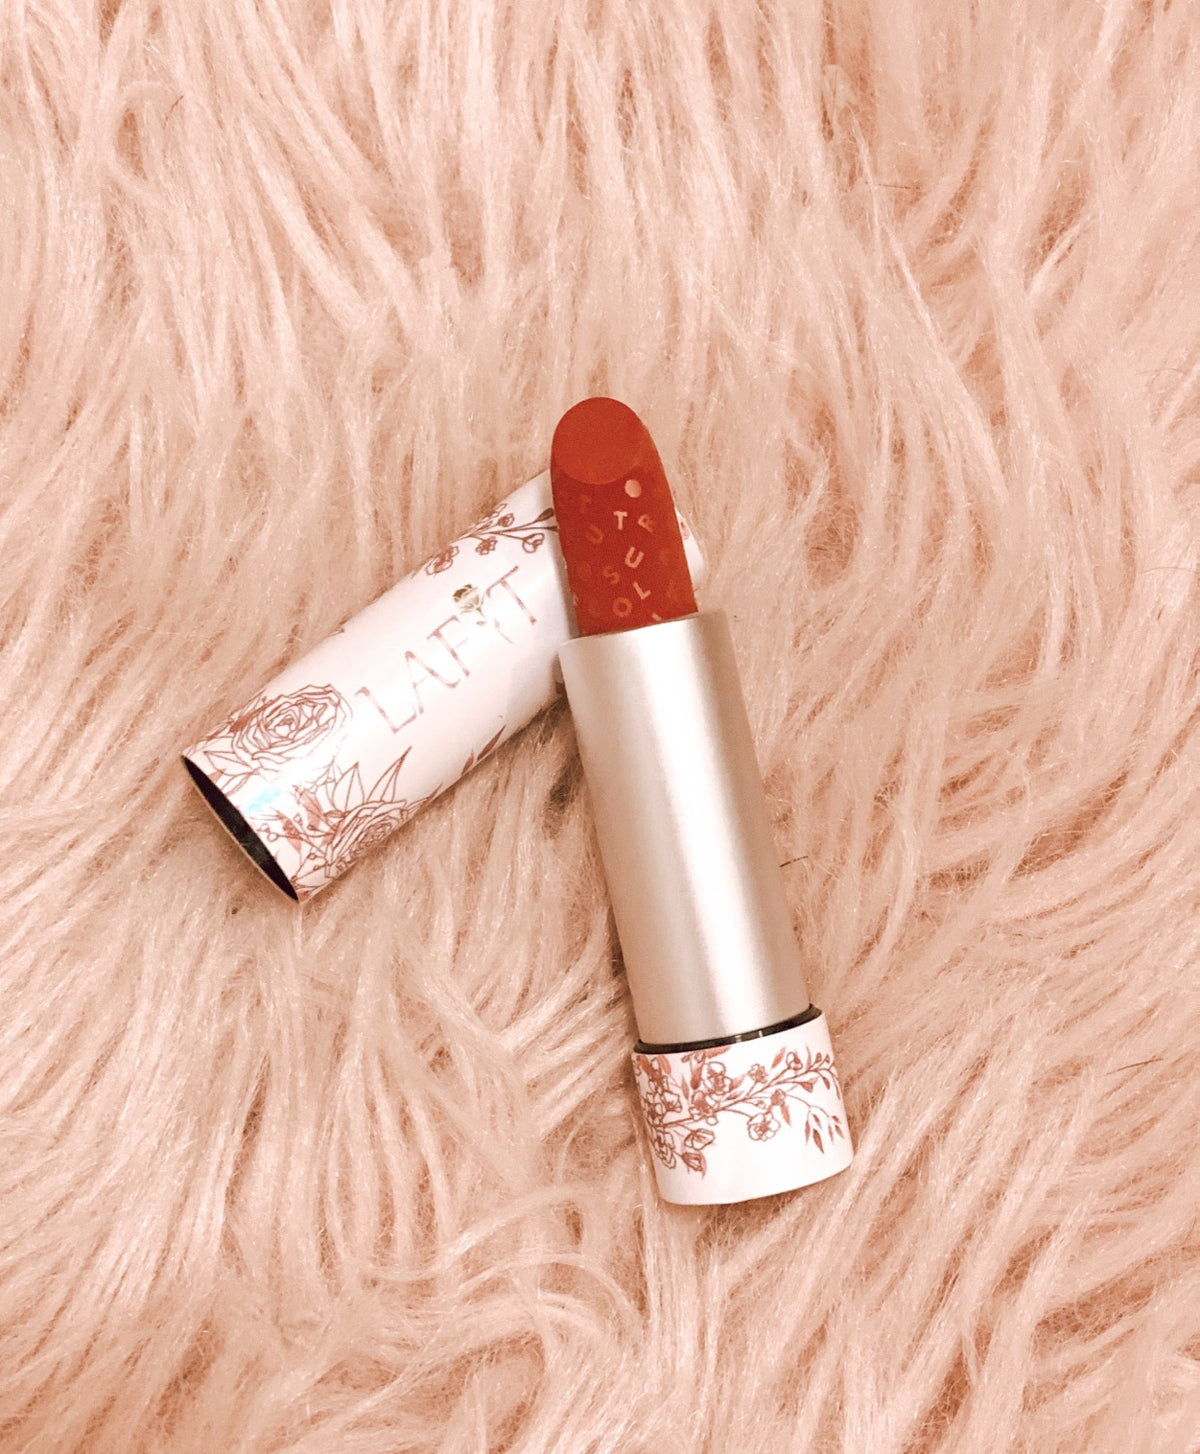 LAFIT 夢幻永生花藝禮盒· Frenchy Rose Box (with lipstick)